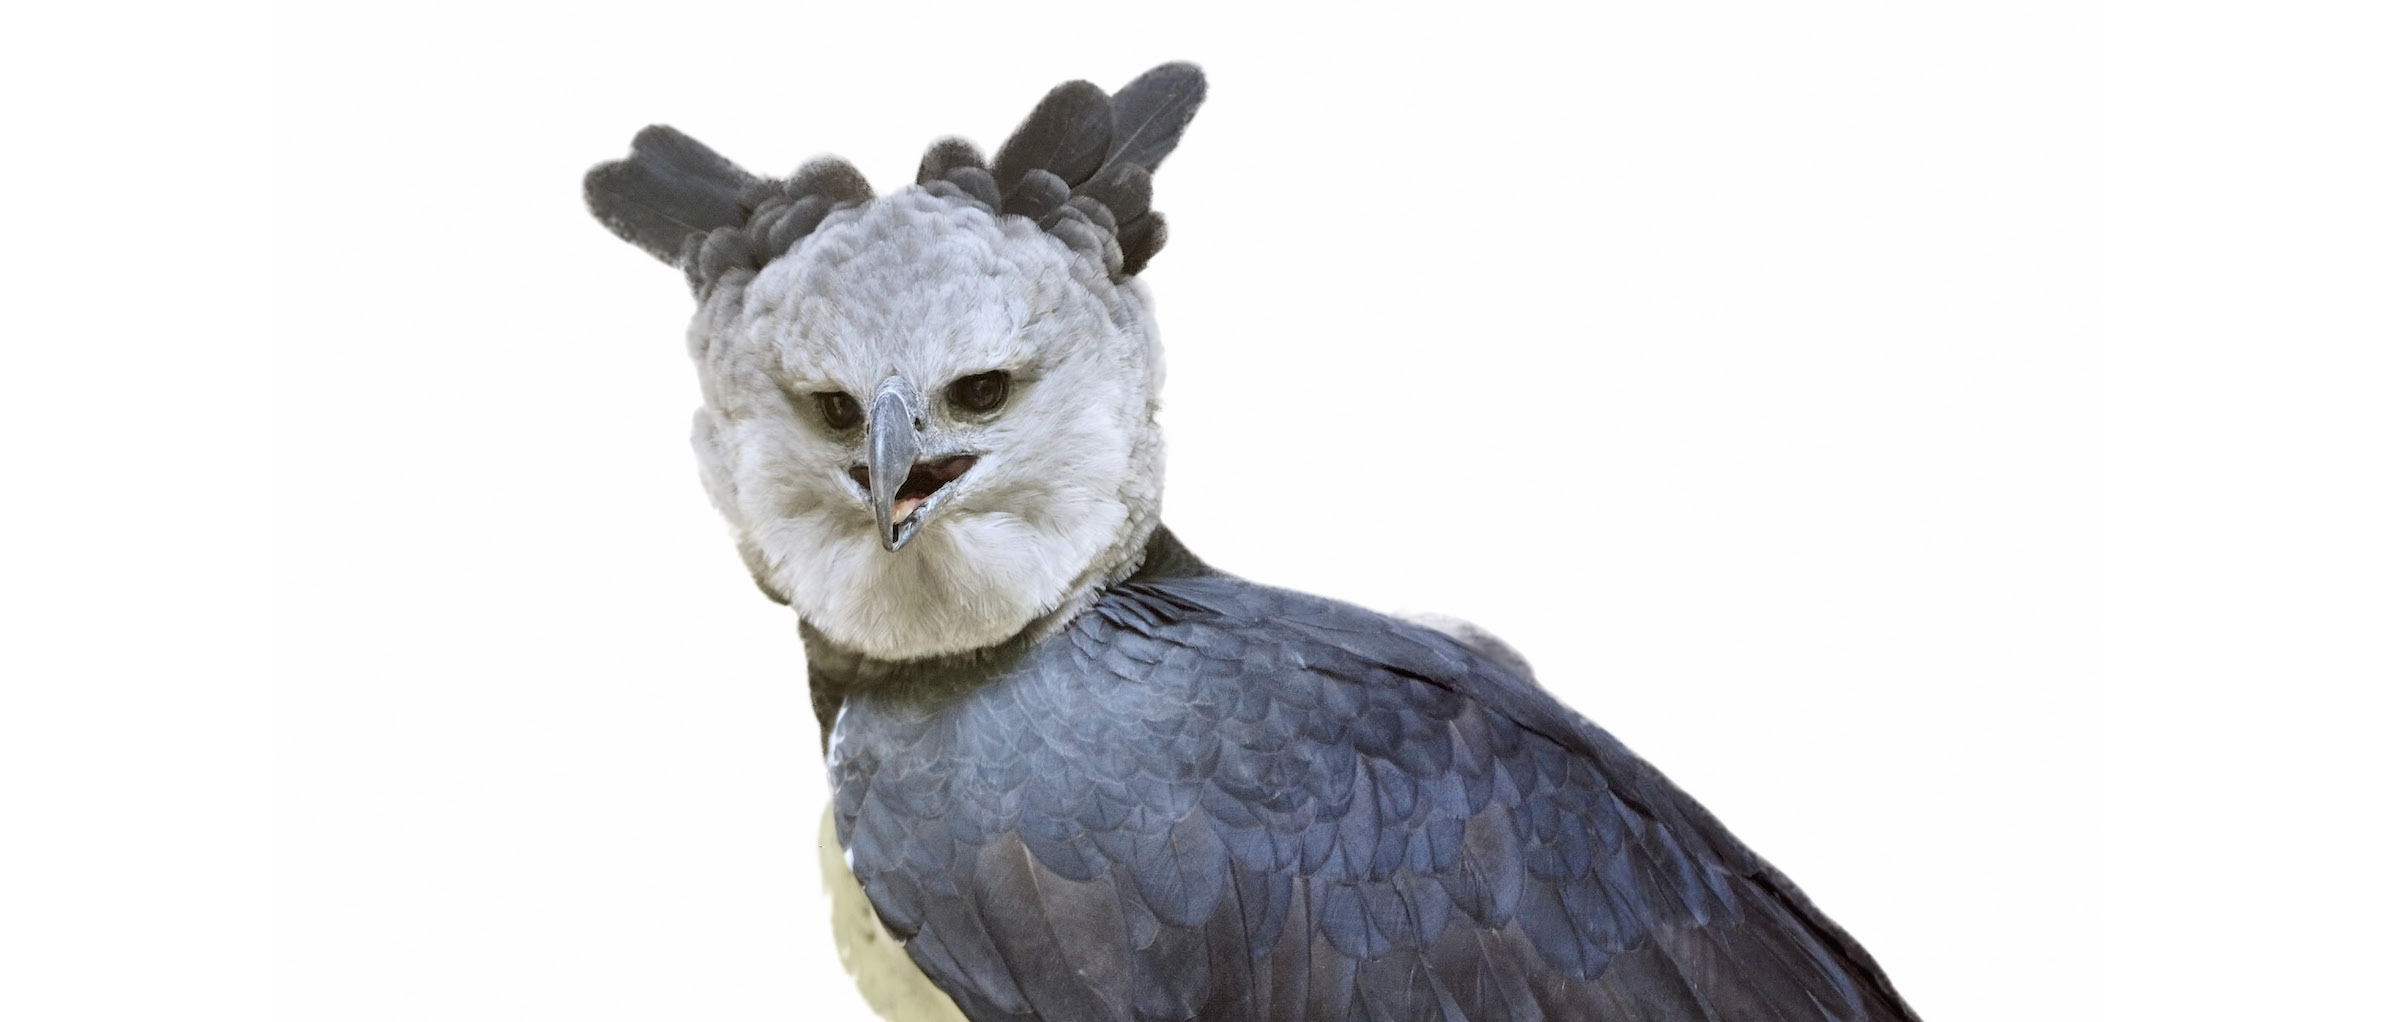 World's weirdest creatures: Meet the harpy eagle, nature's